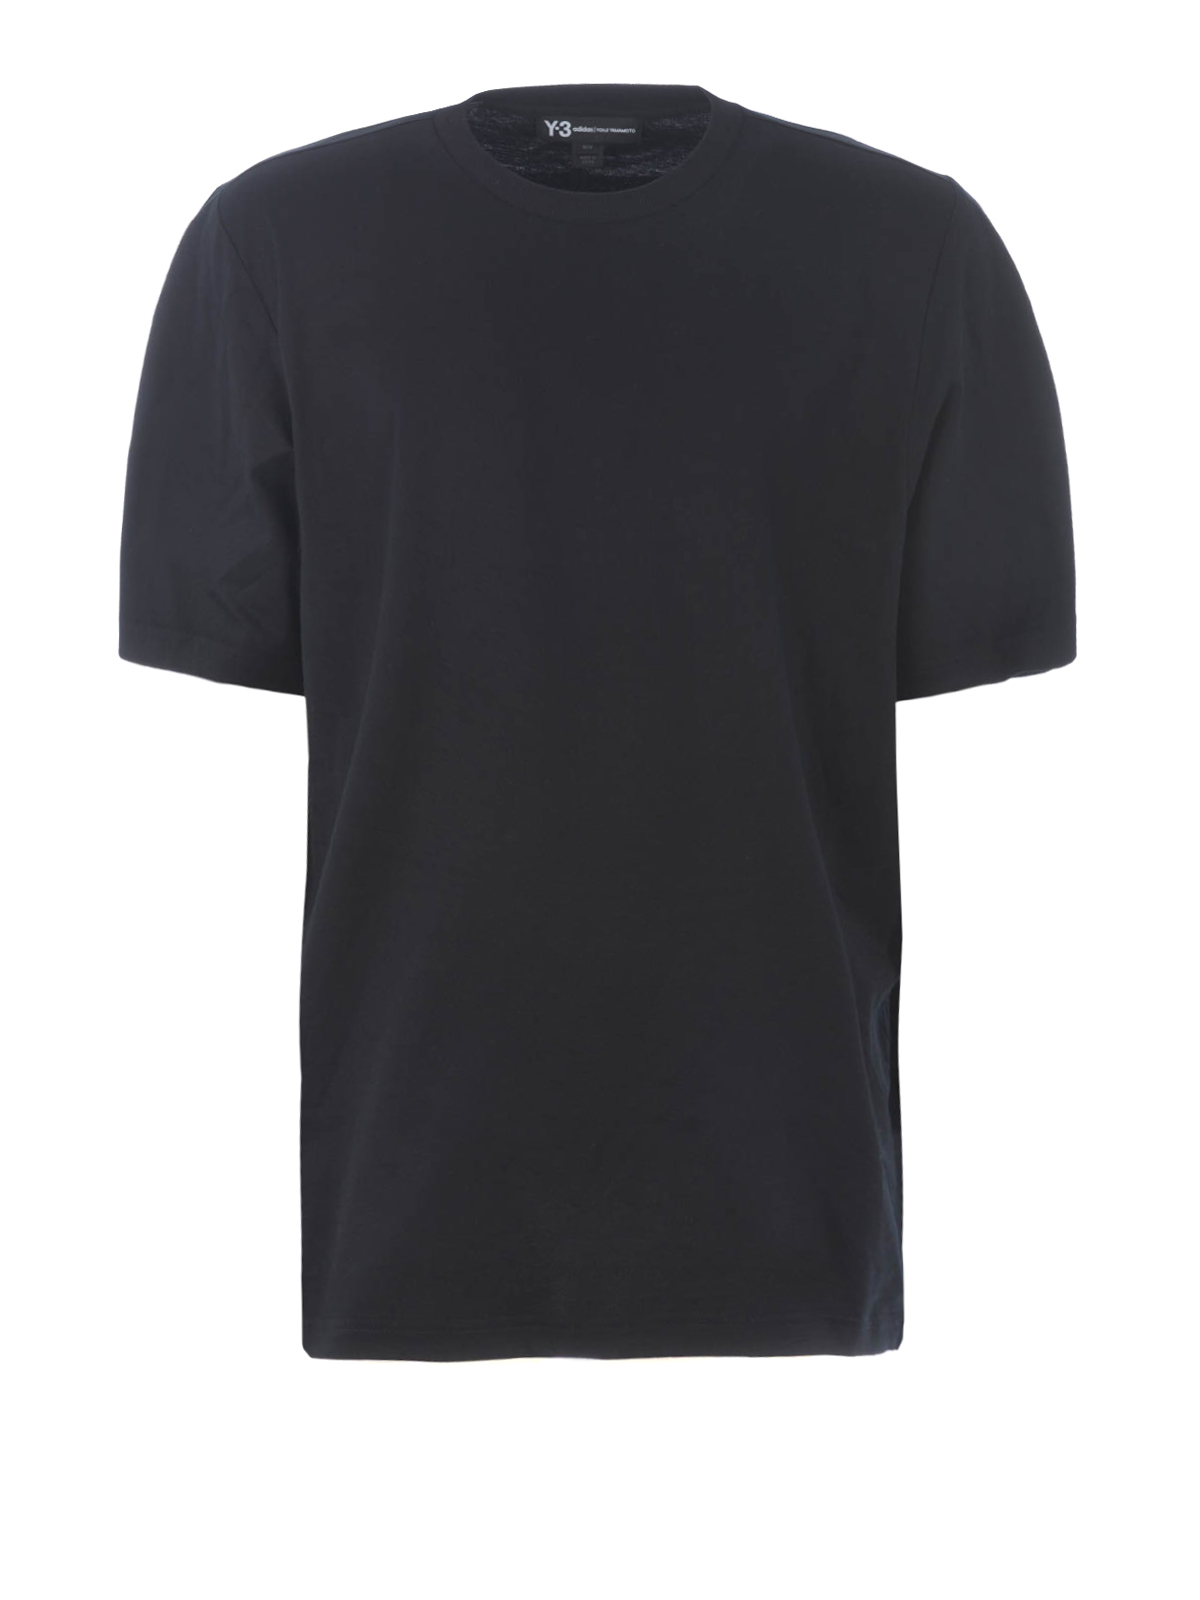 T-shirts Y-3 - Y-3 Yohji Skull black Tee - EH5756BLACK | iKRIX.com